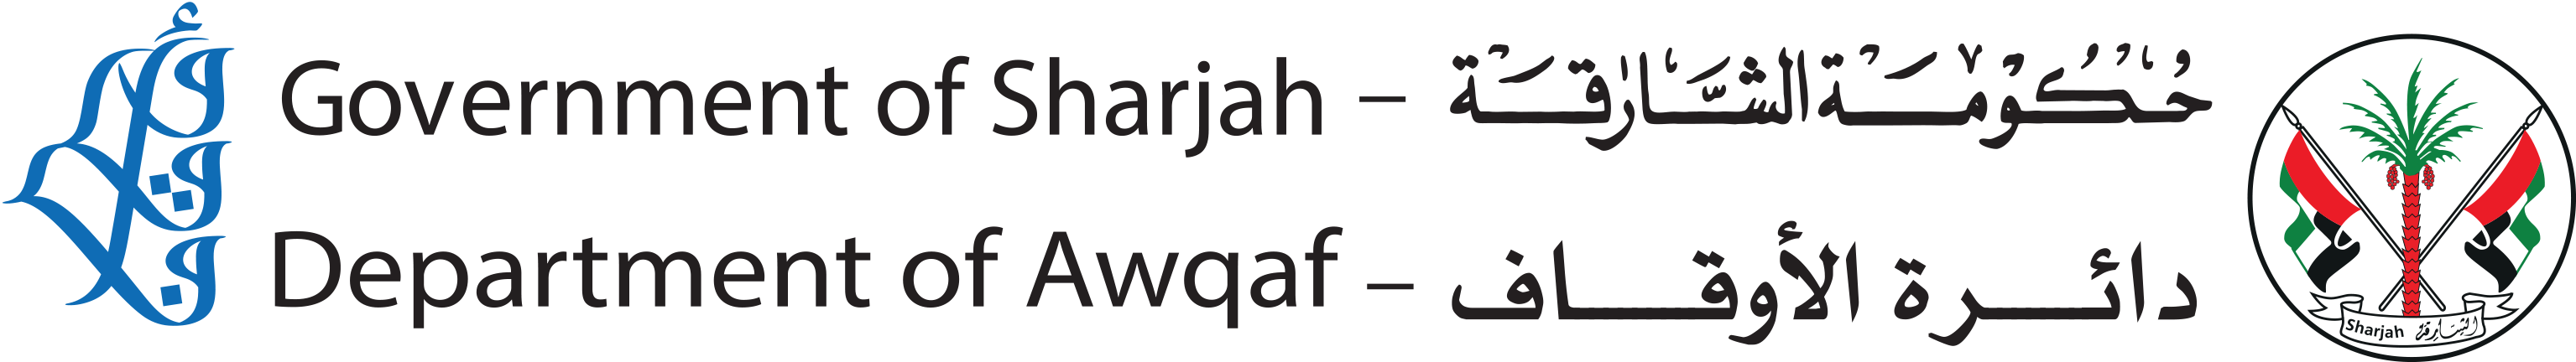 Department of Awqaf  Sharjah